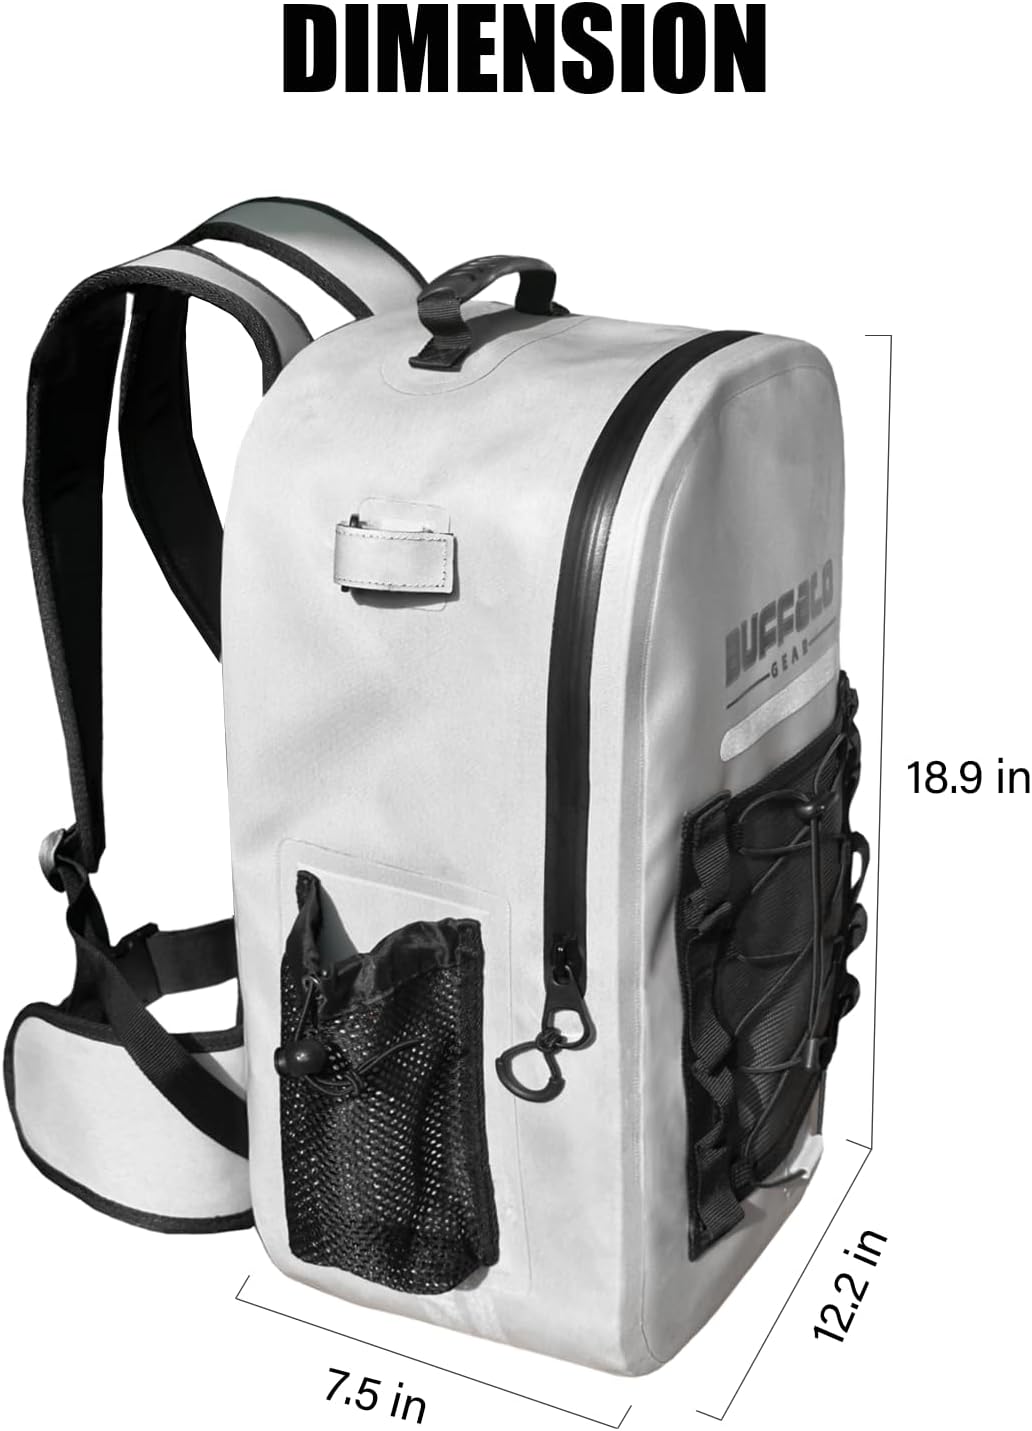 26L Waterproof Fishing Backpack with Rod Holder - Buffalo Gear 